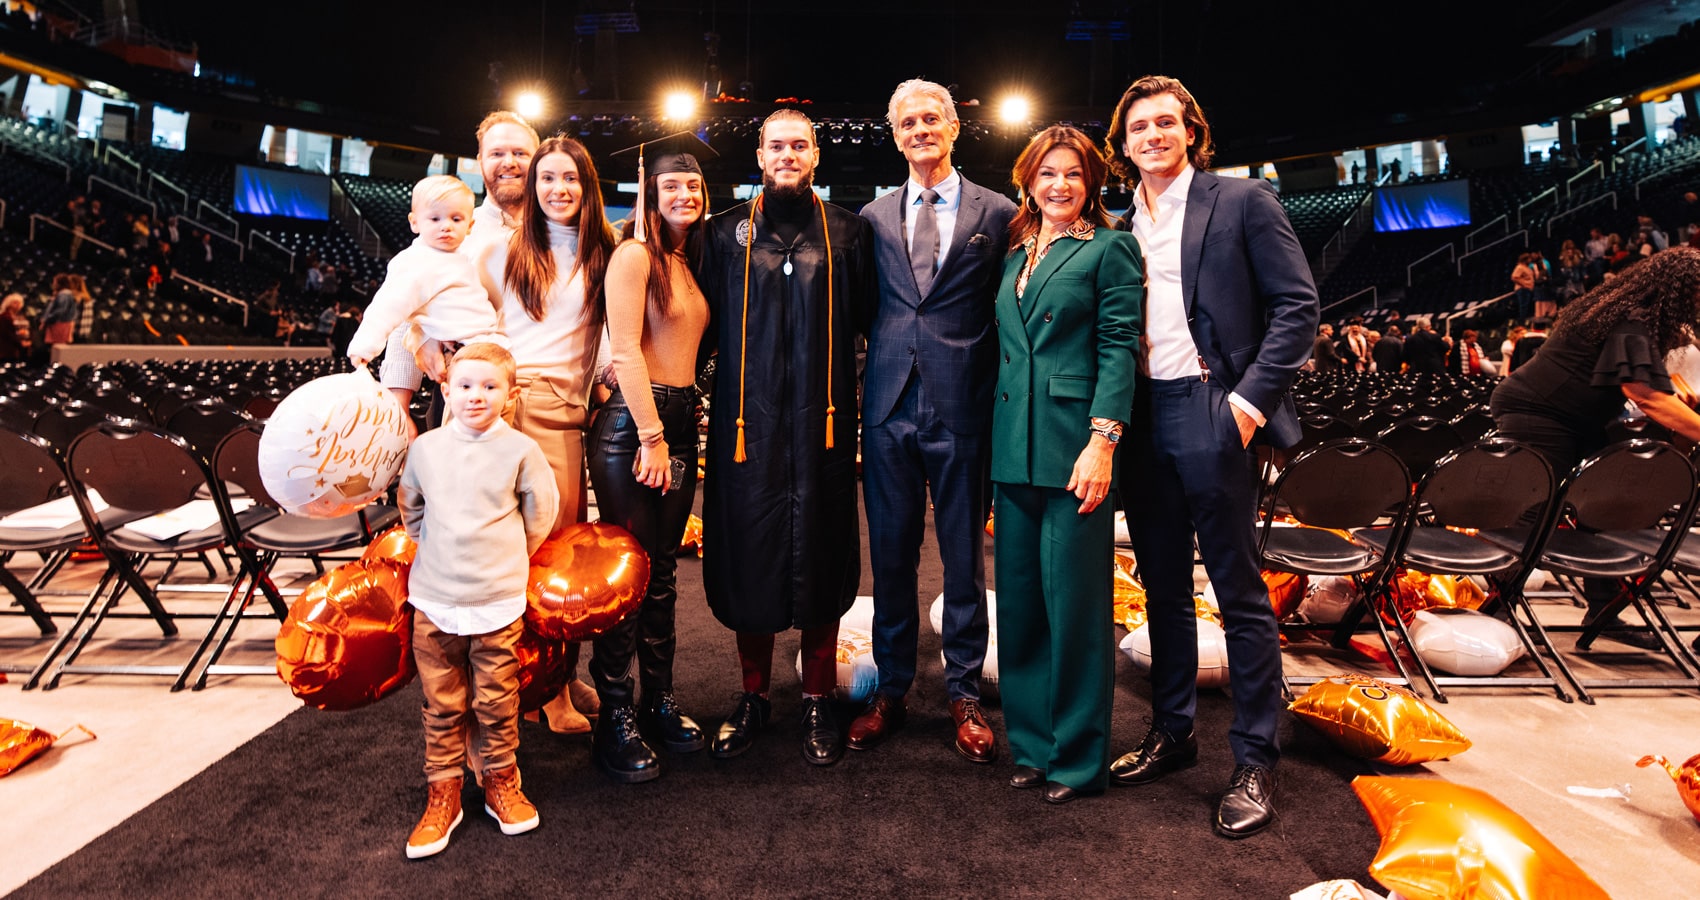 The Castroverde family at Jose Jr's December 2021 graduation